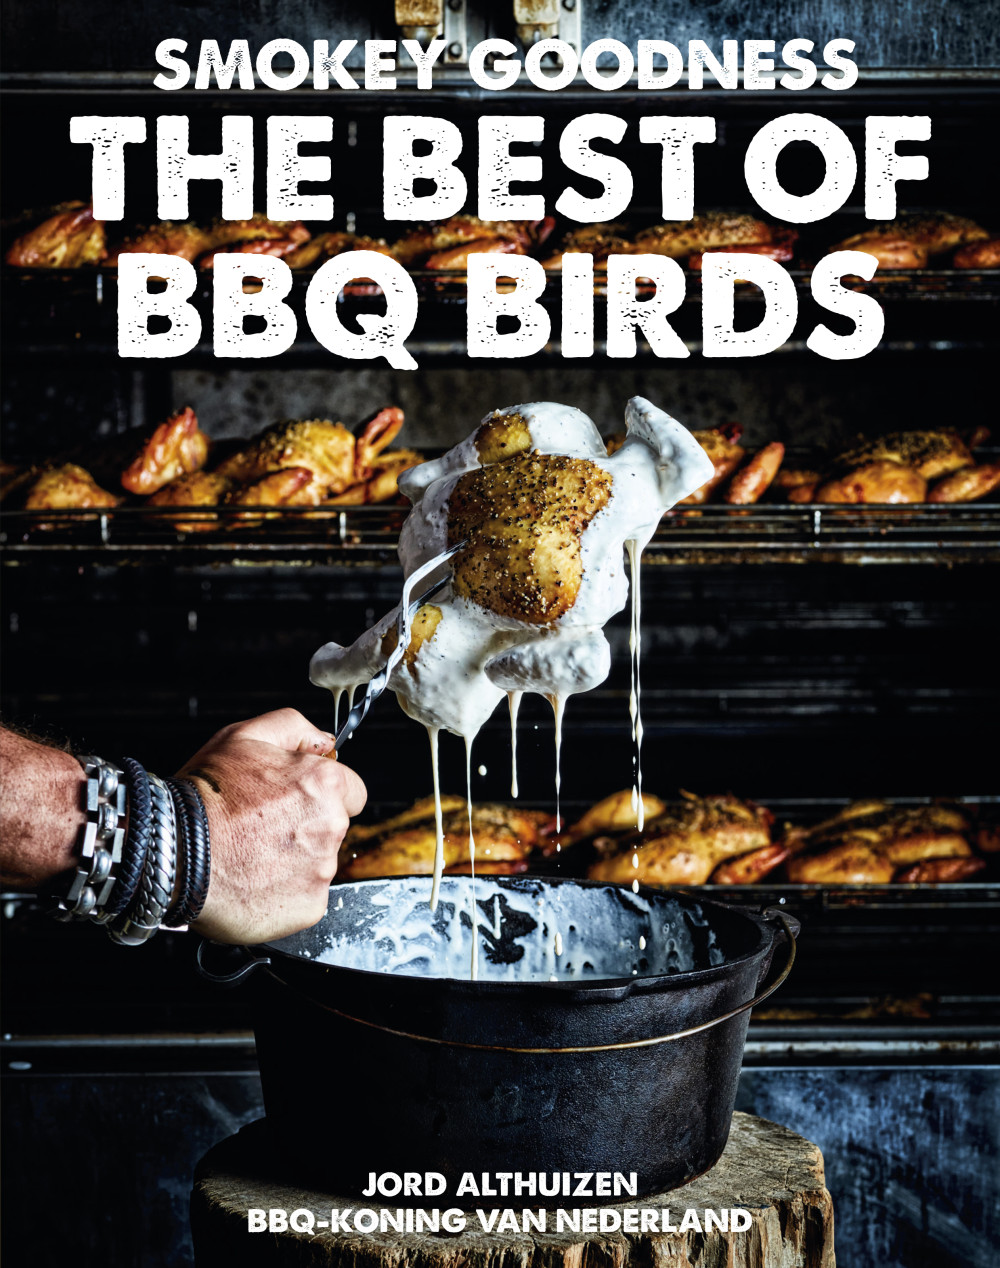 The best of bbq birds